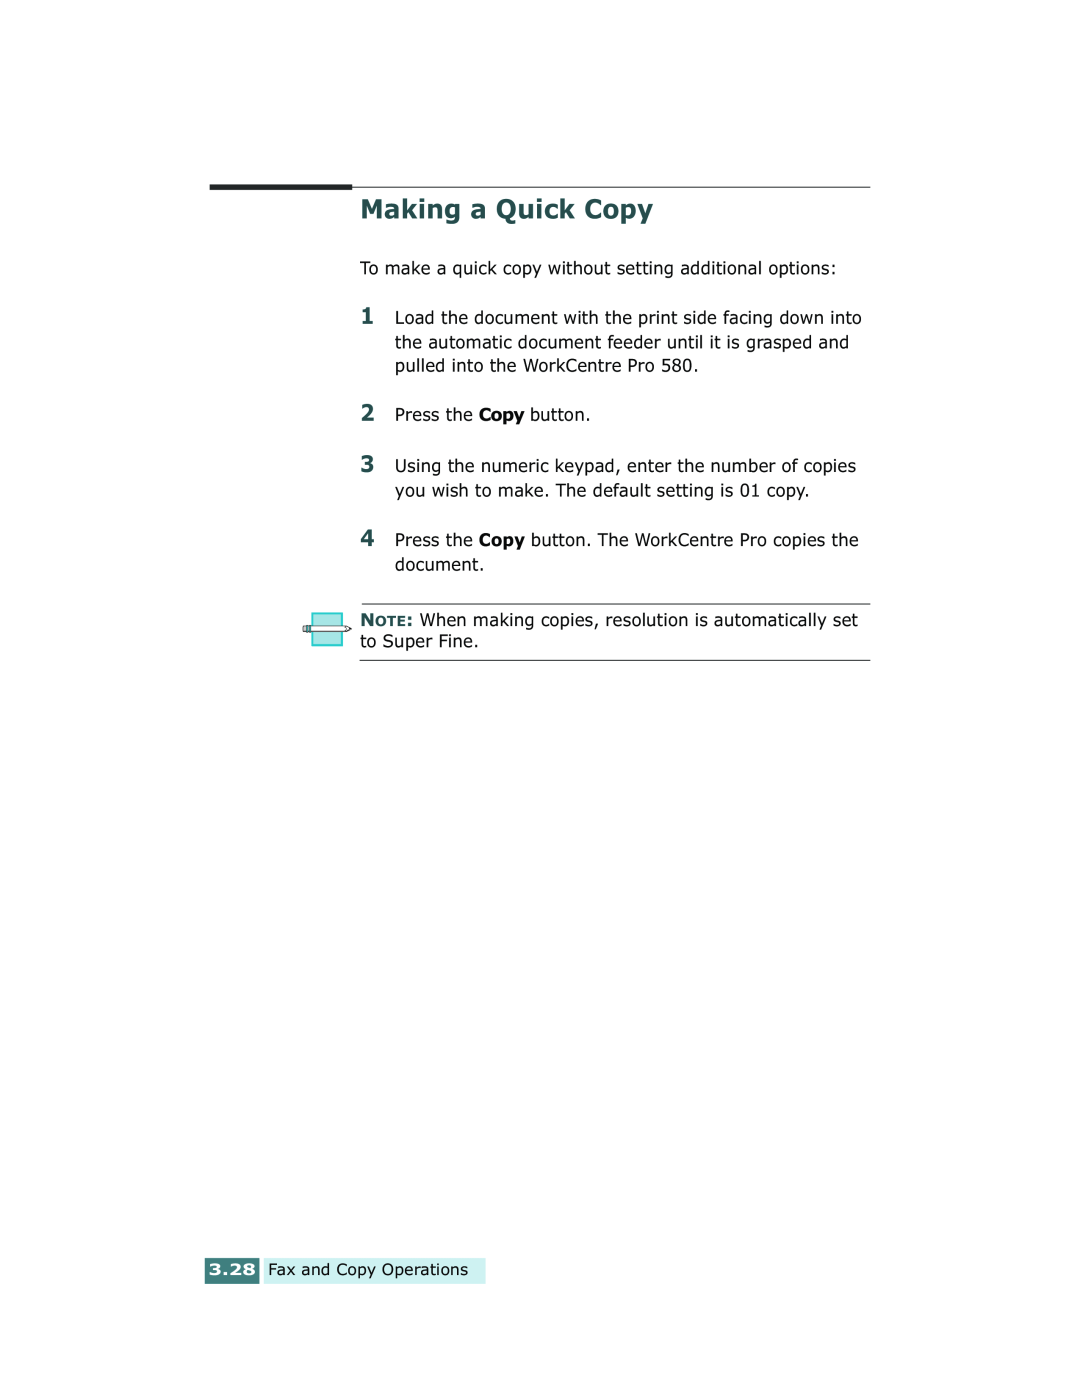 Xerox Pro 580 manual Making a Quick Copy 